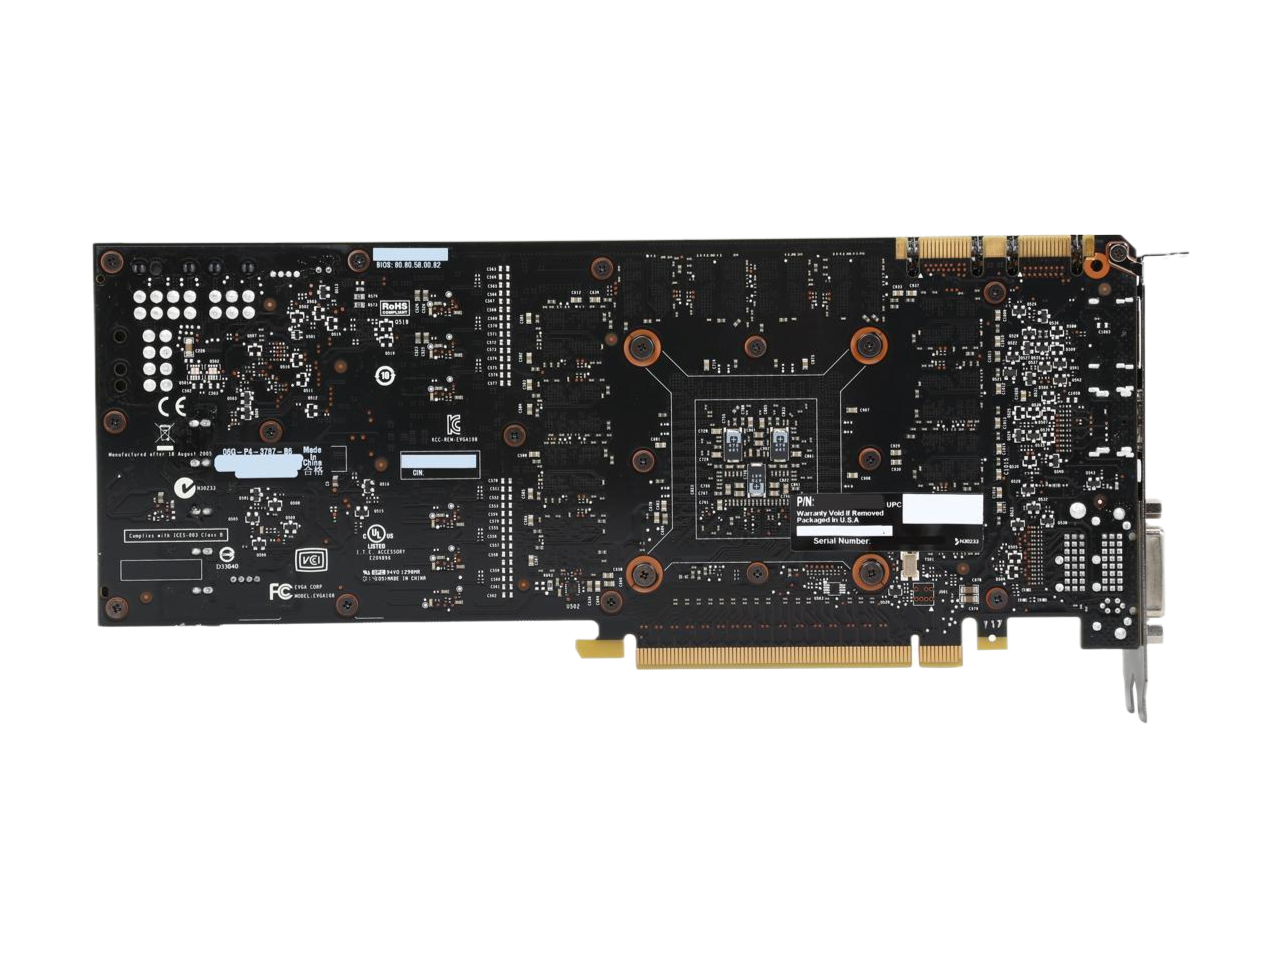 EVGA GeForce GTX 780 Ti Superclocked 3GB 384-Bit GDDR5 PCI Express 3.0 SLI Support w/EVGA ACX Cooler G-SYNC Support Video Card 03G-P4-2884-KR